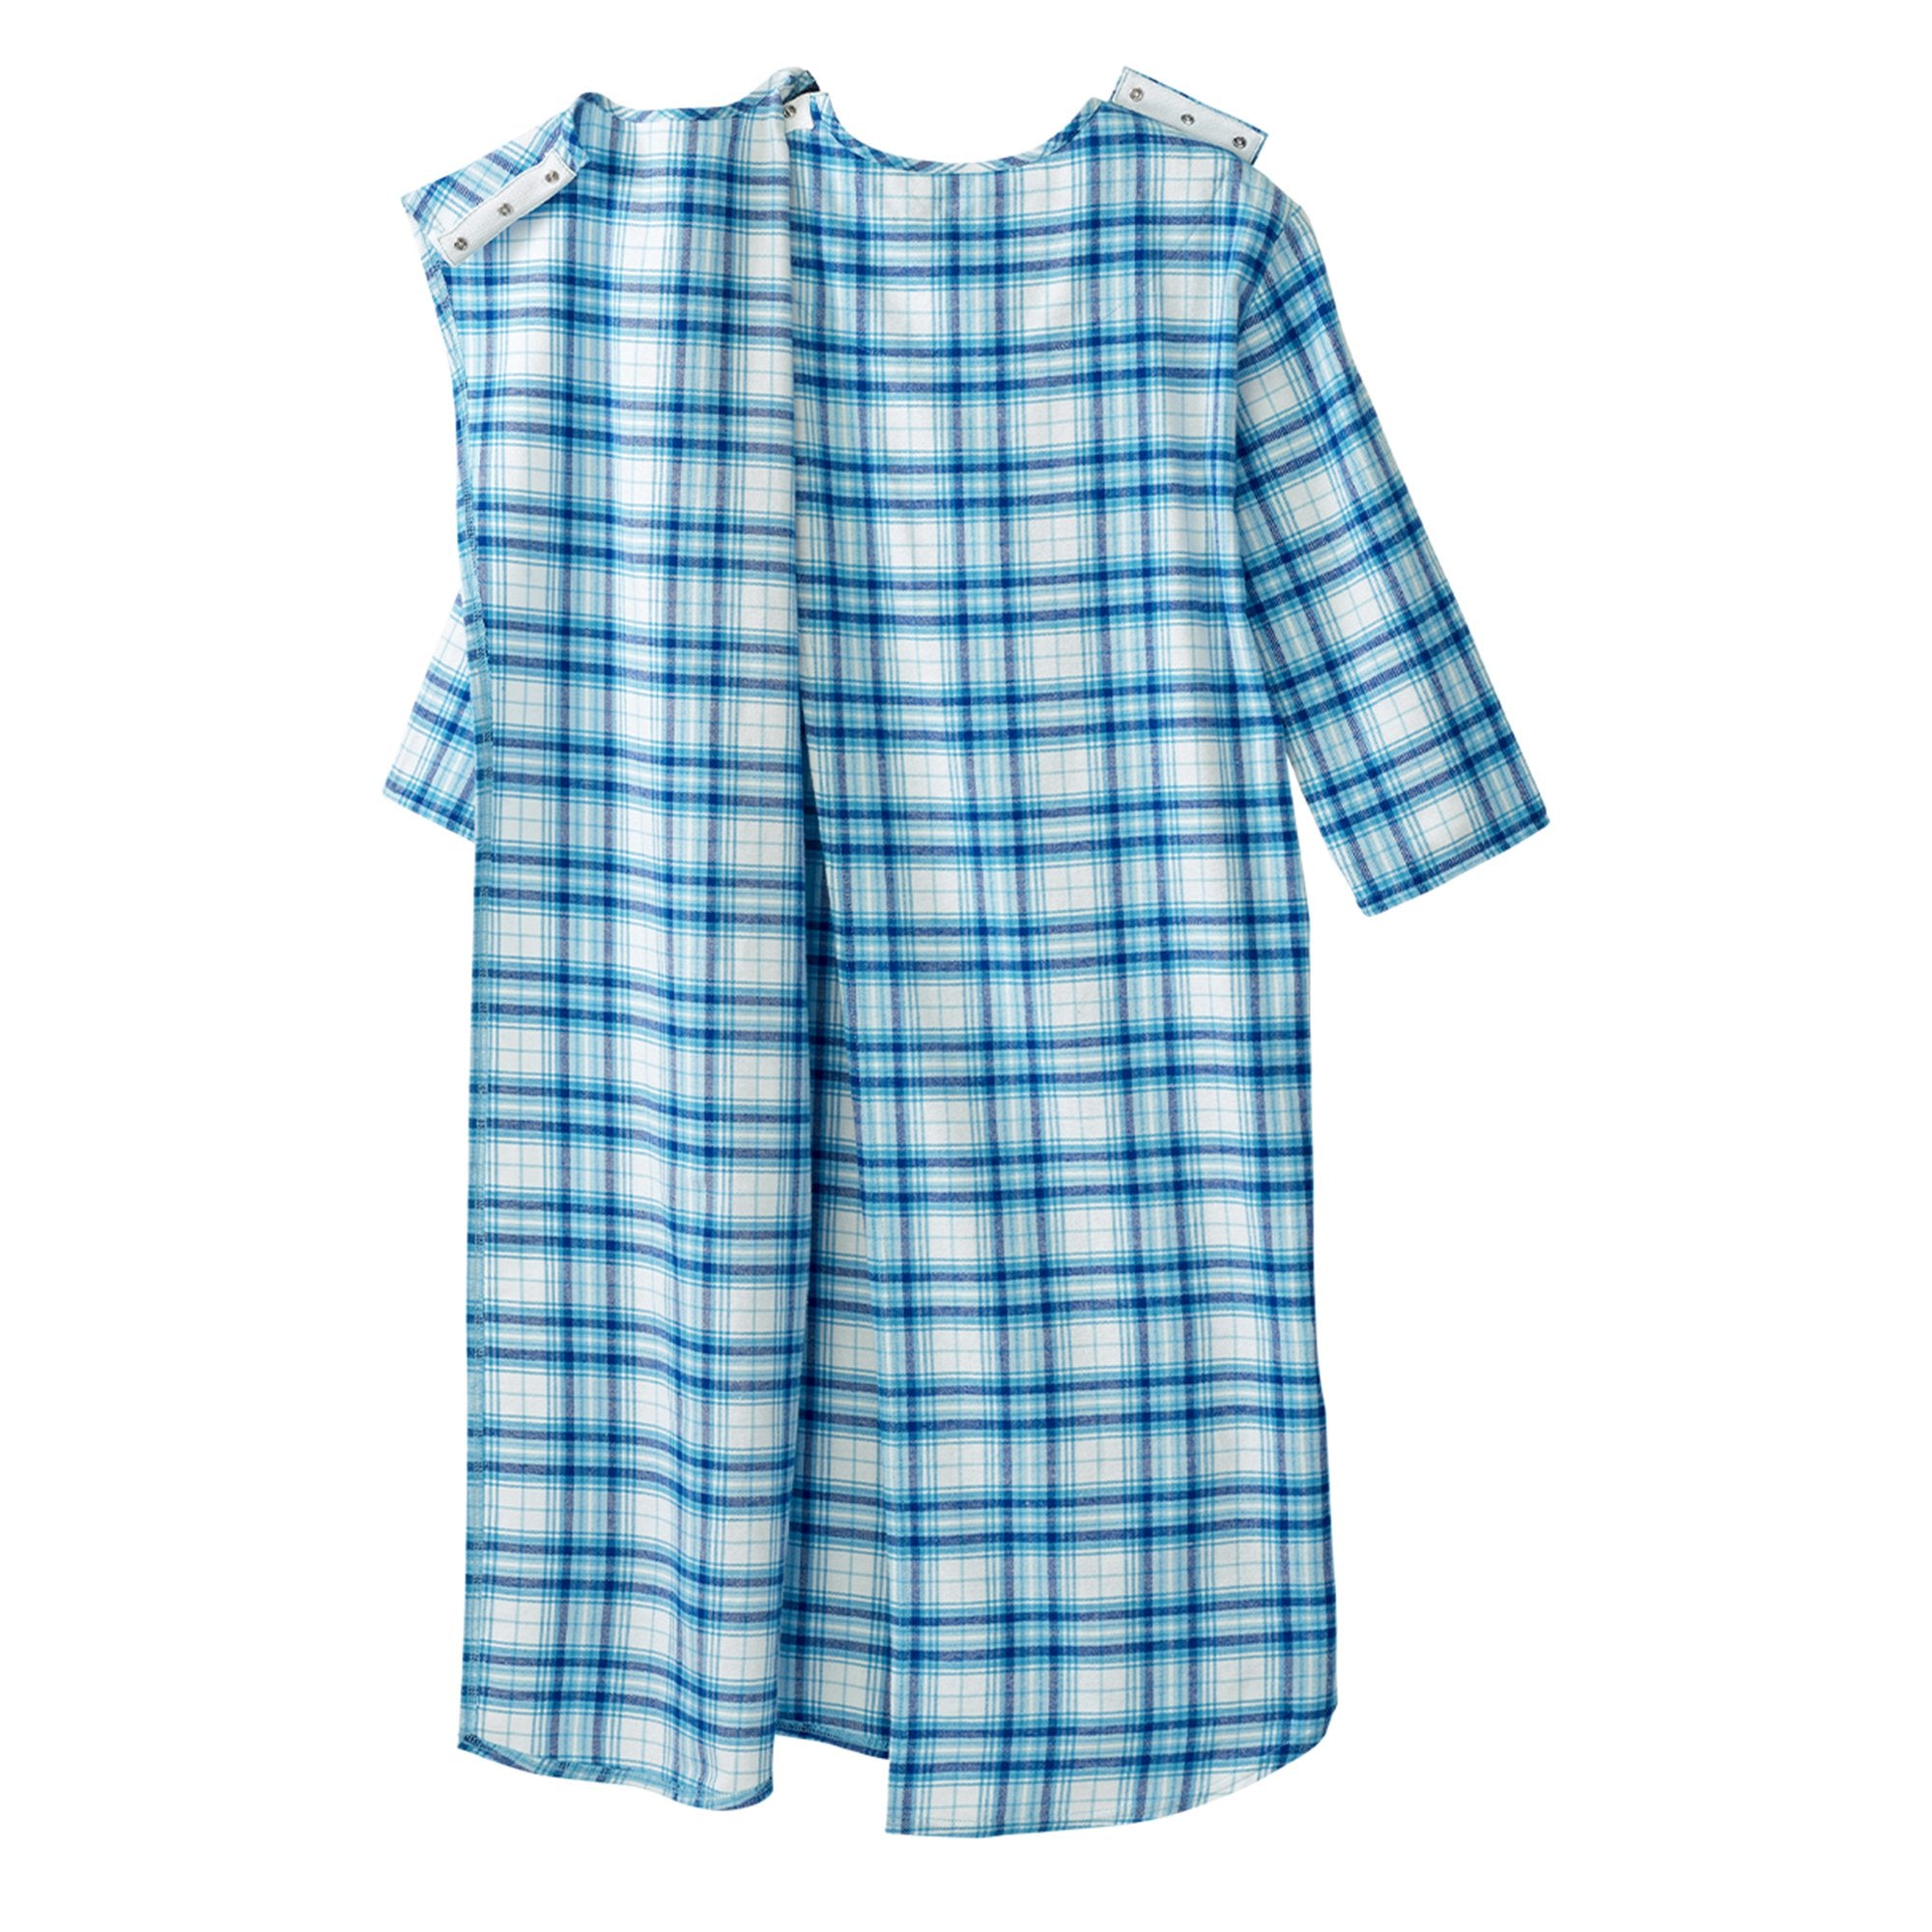 Silverts® Shoulder Snap Patient Exam Gown, Small, Turquoise Plaid (1 Unit)